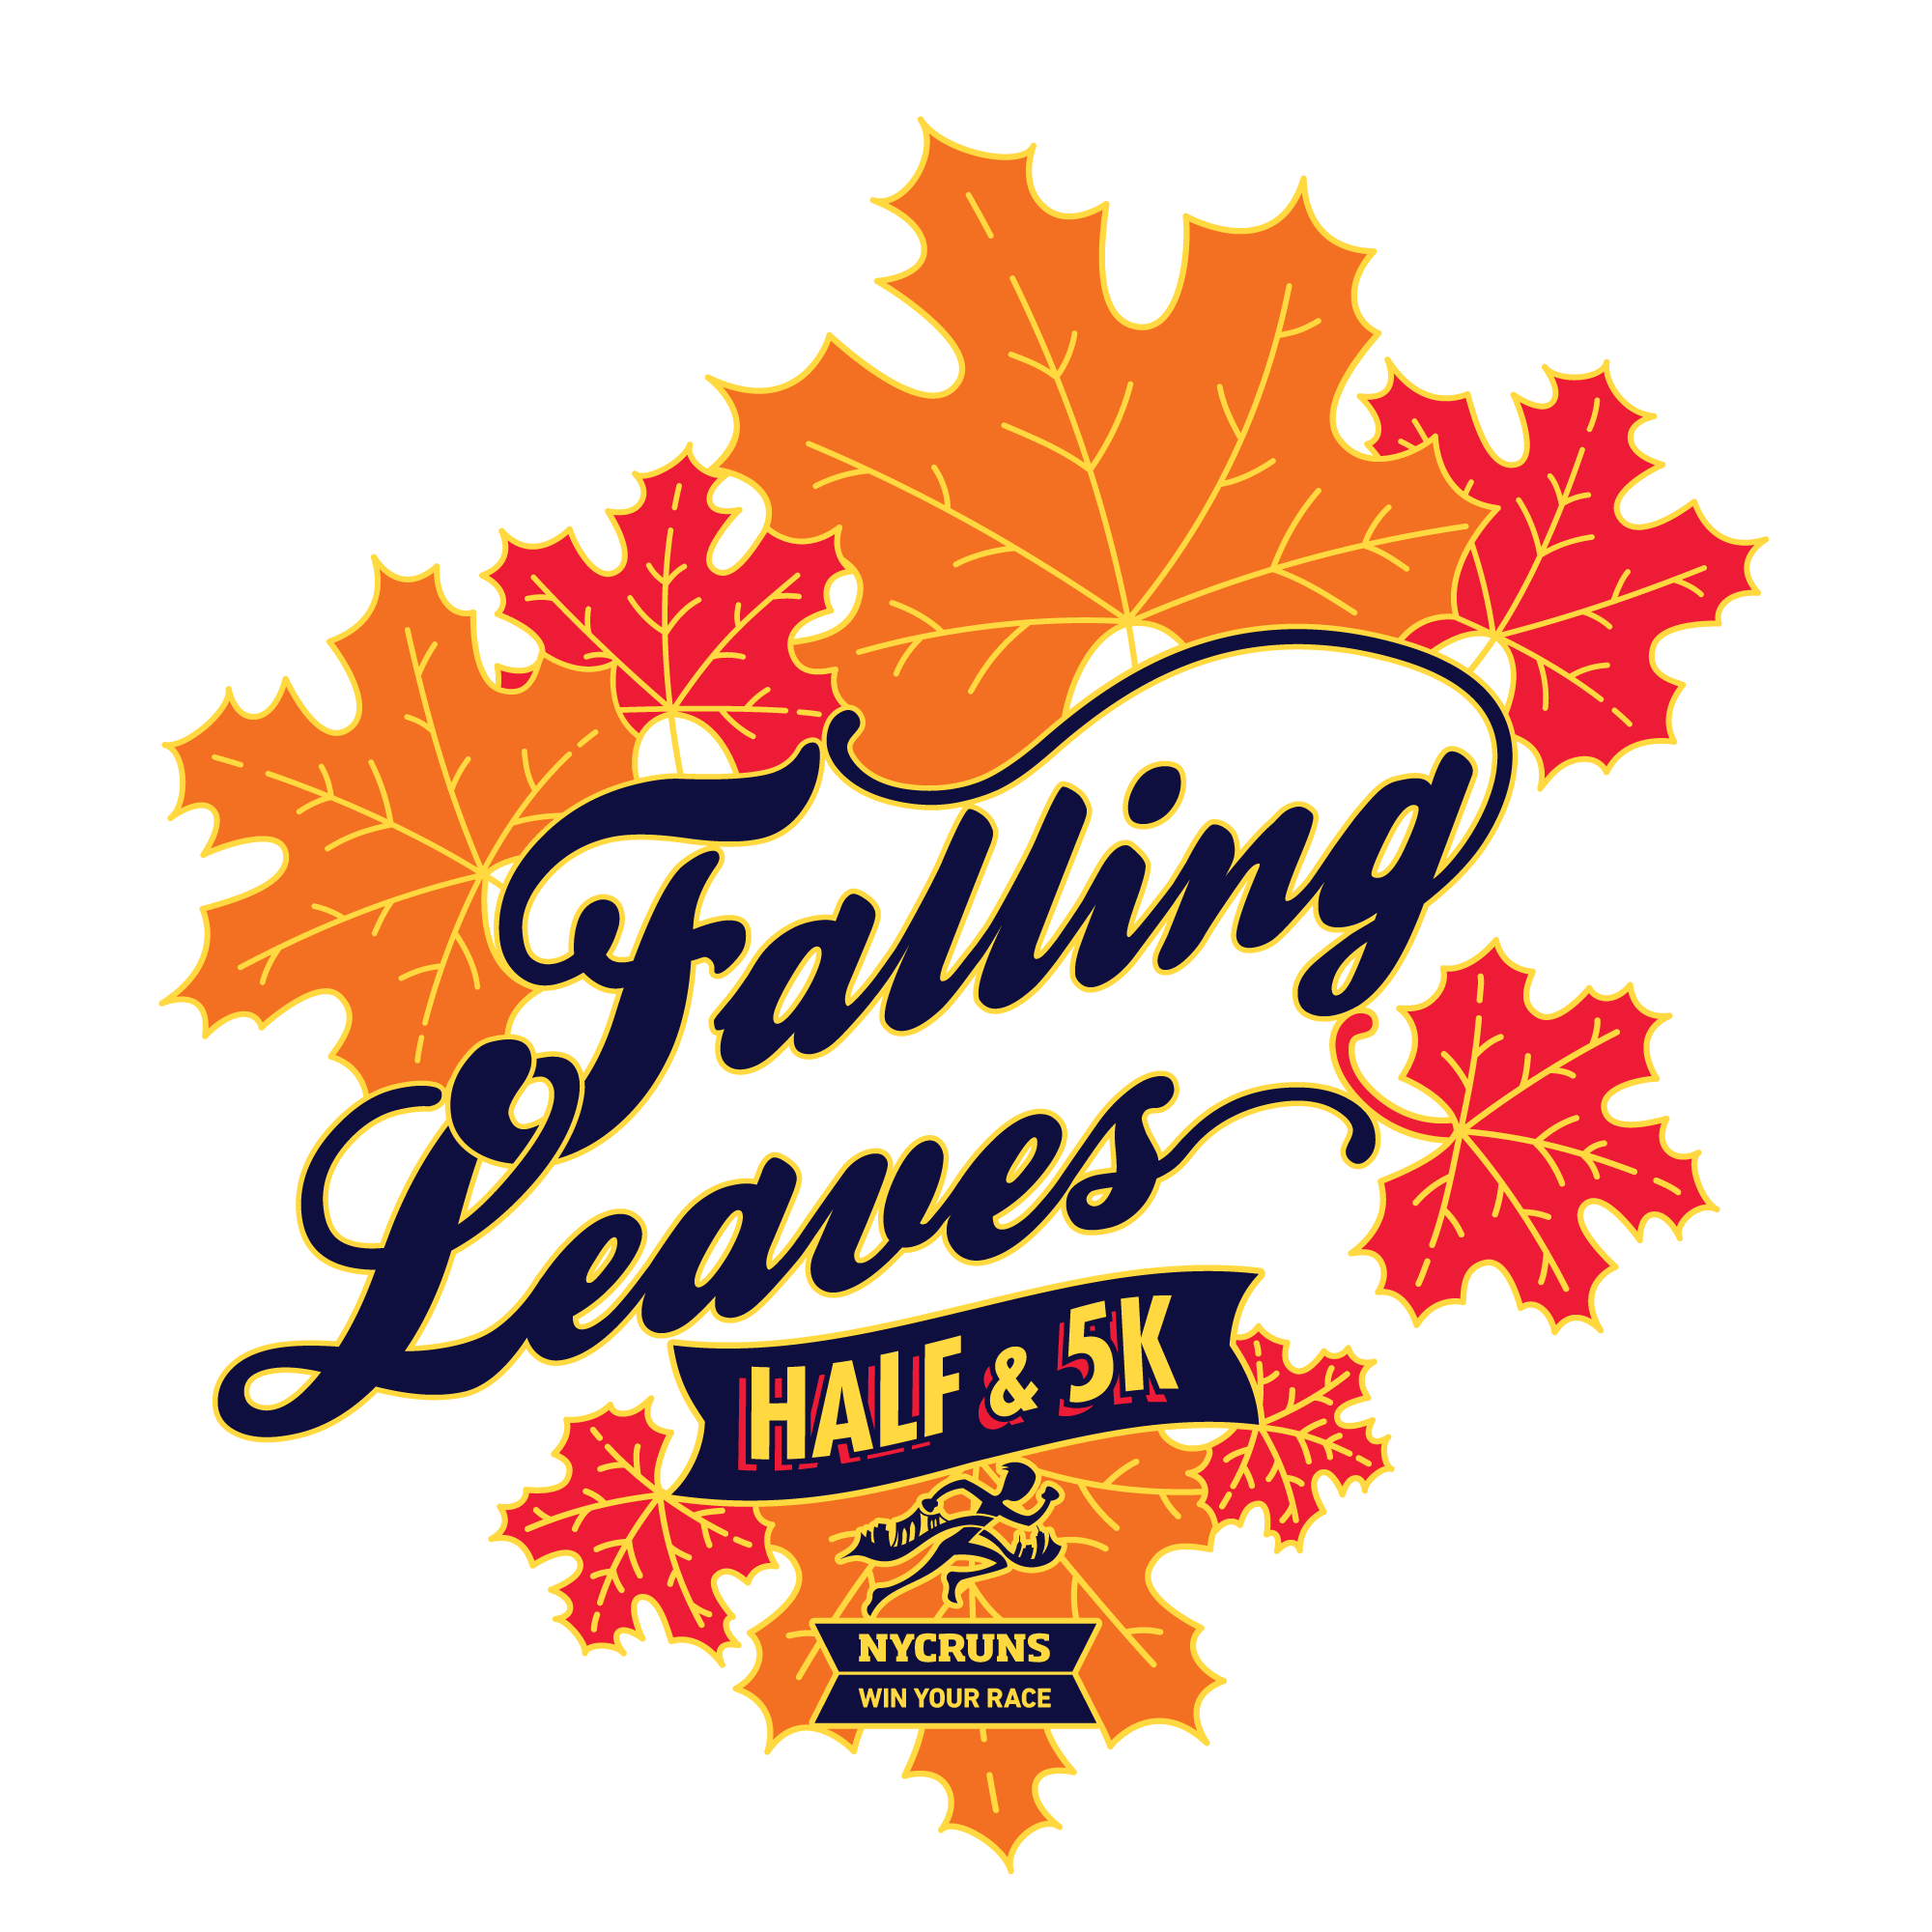 NYCRUNS Falling Leaves Half Marathon logo on RaceRaves